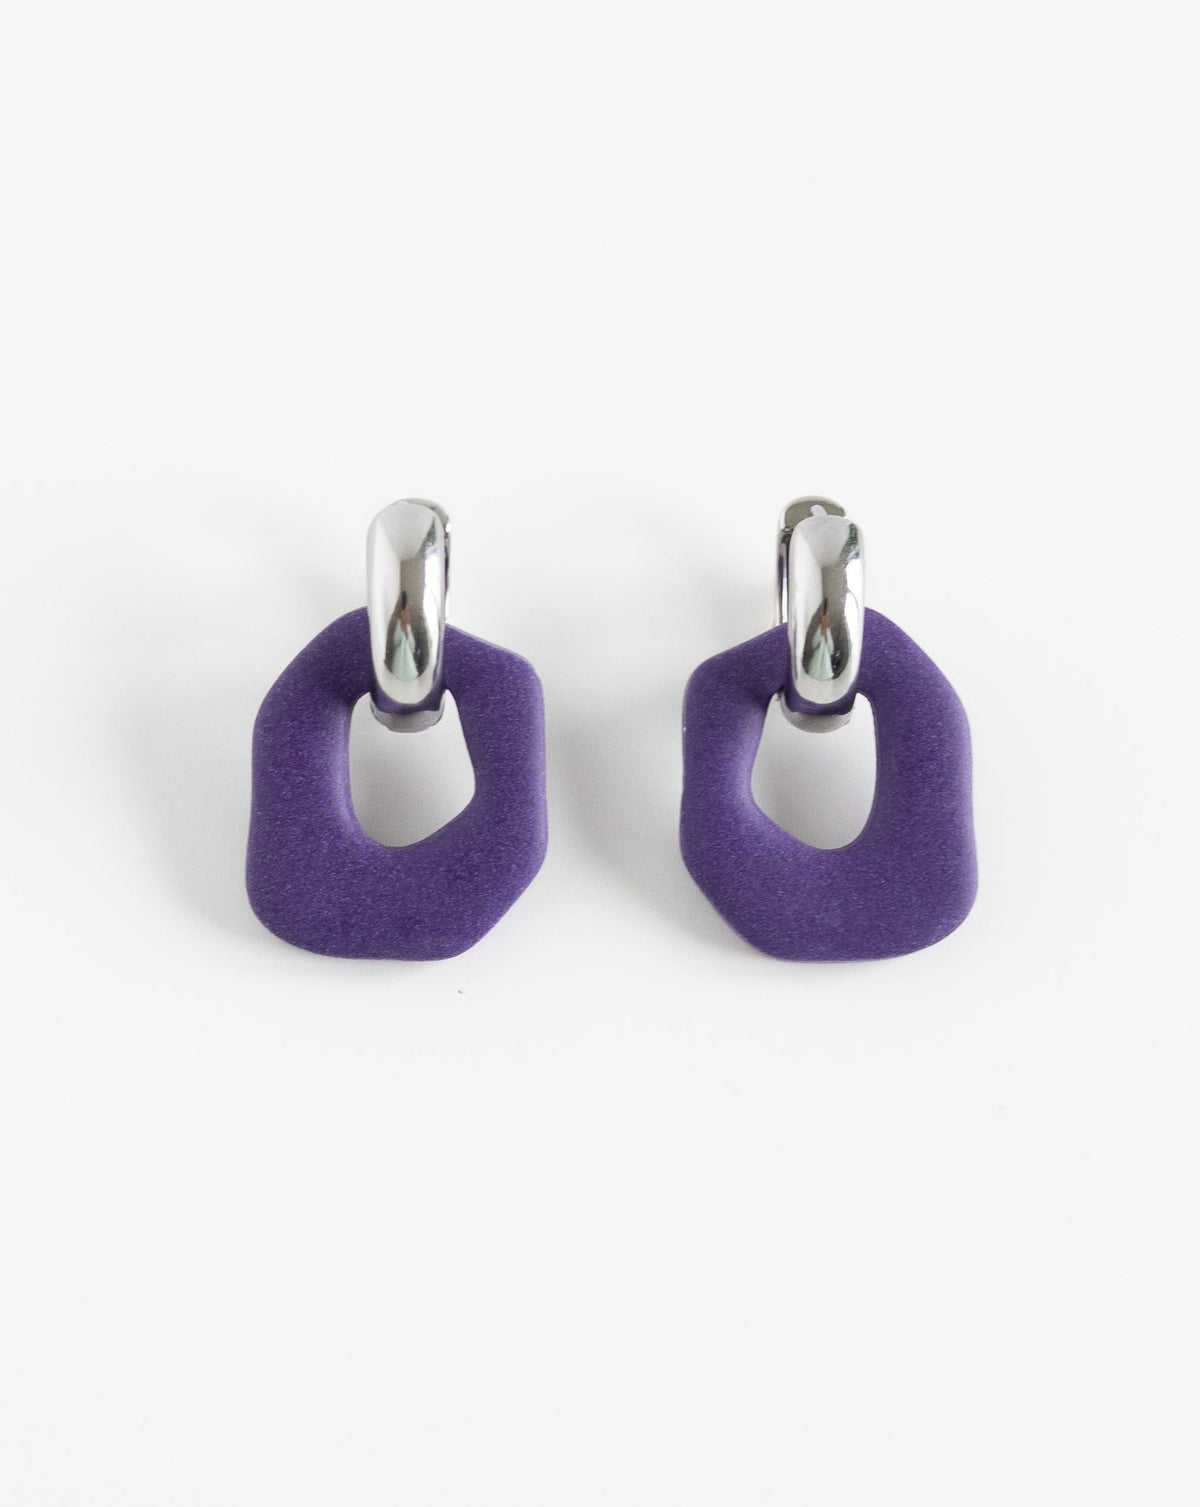 Close-up of Darien earrings in Purple with silver hoops